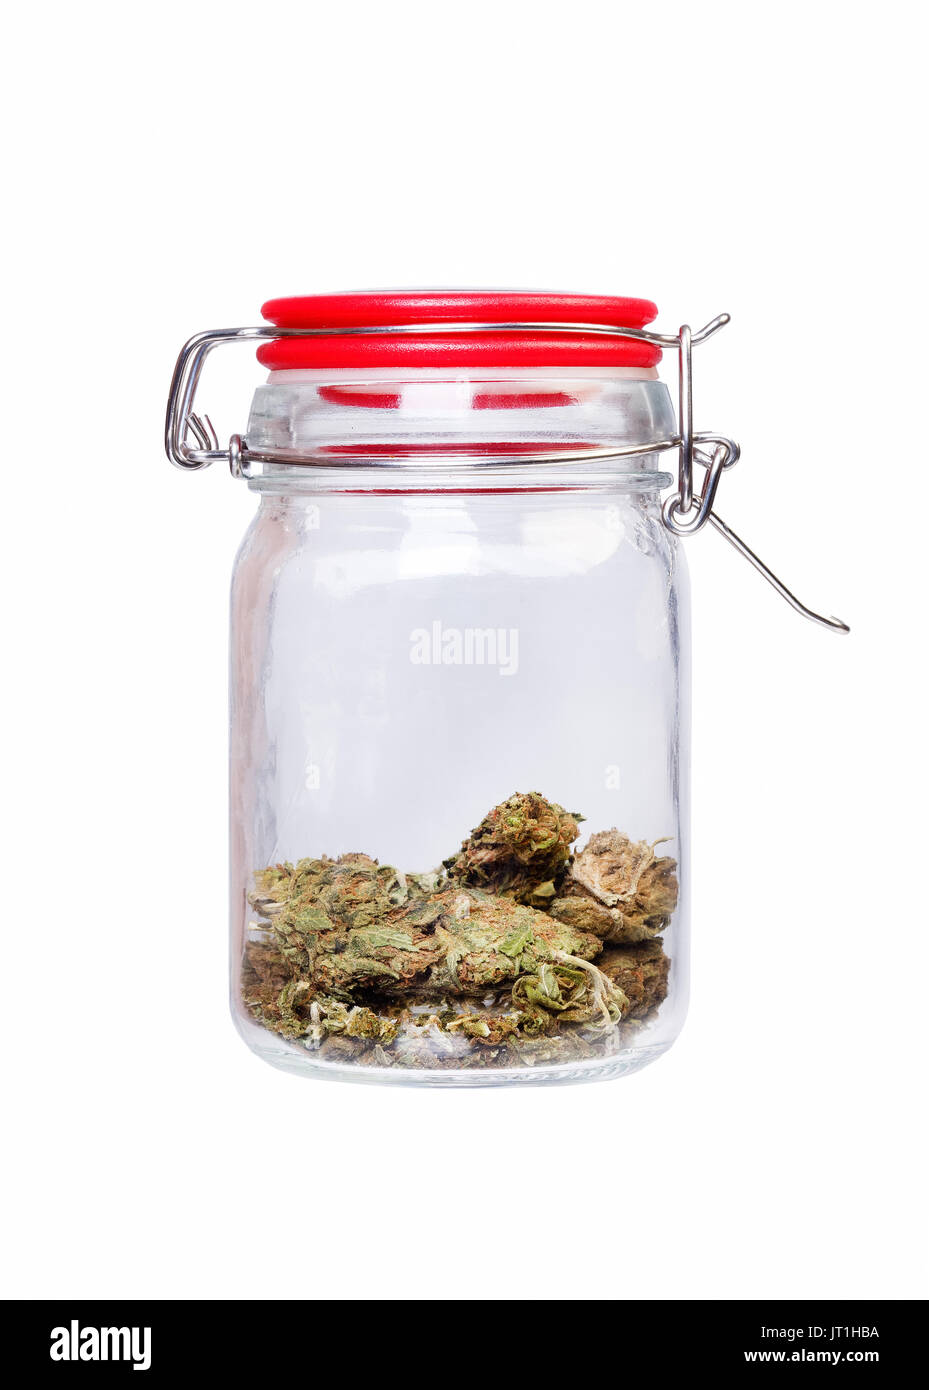 Marijuana and cannabis, jar of weed on white background Stock Photo